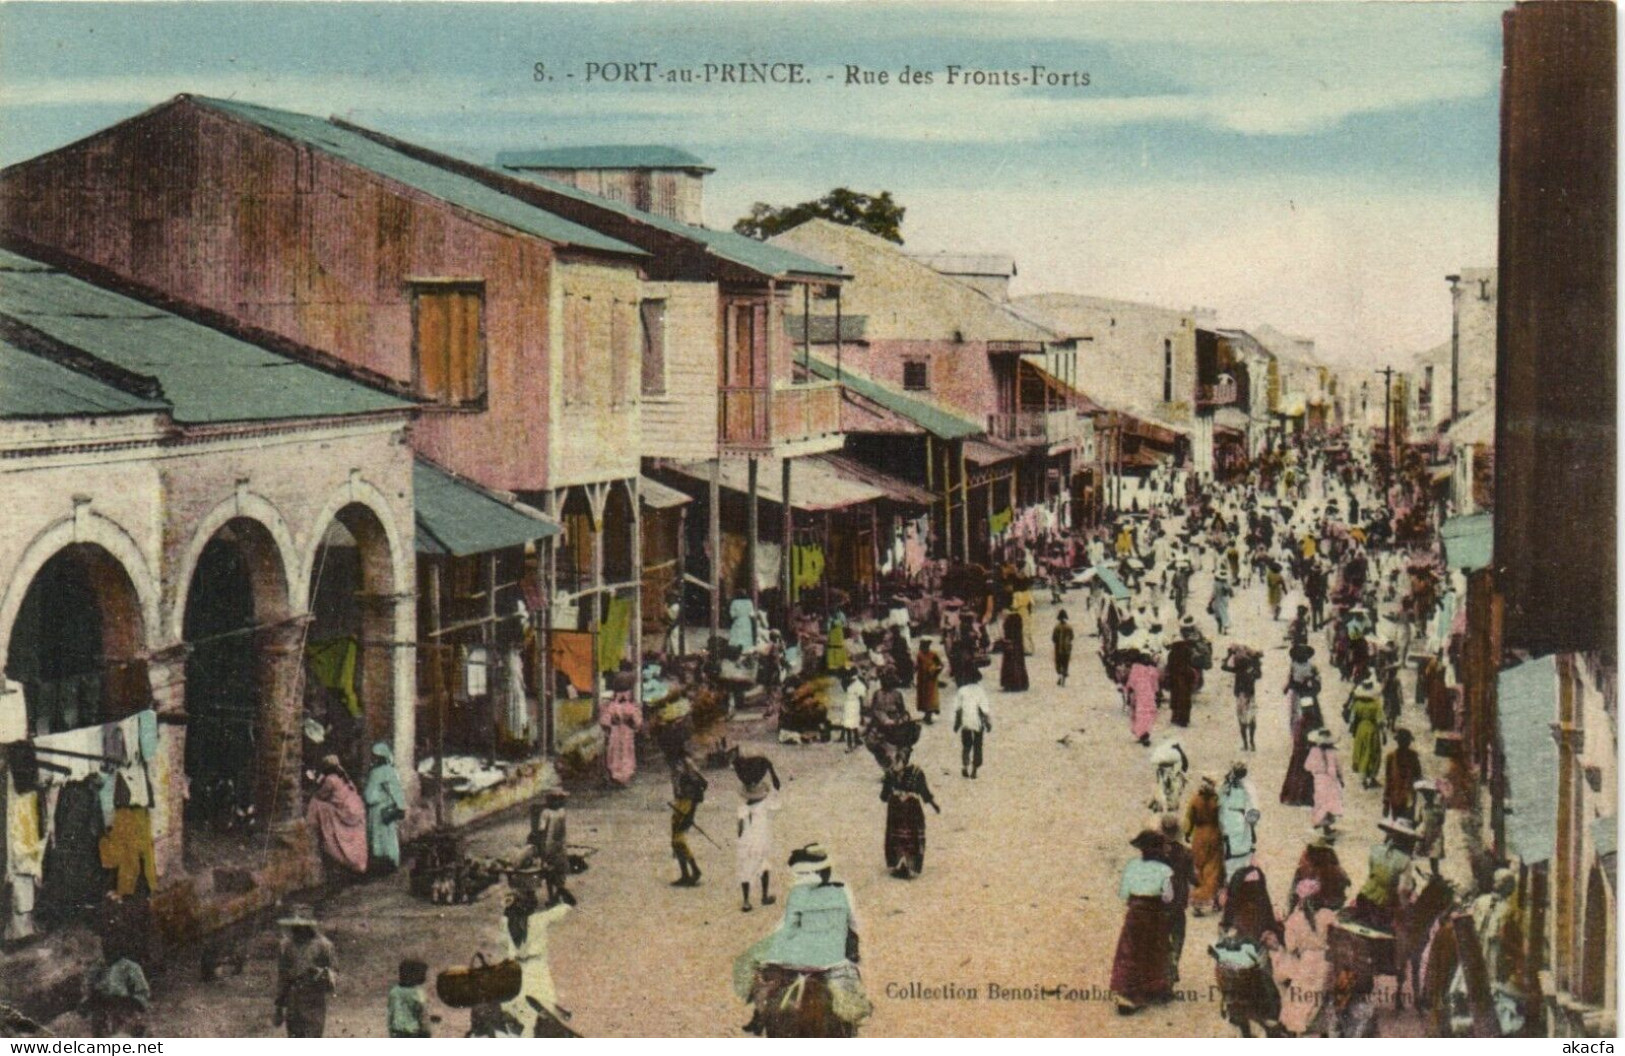 PC HAITI CARIBBEAN PORT-au-PRINCE RUE DES FRONTS-FORTS Vintage Postcard (b52088) - Haiti